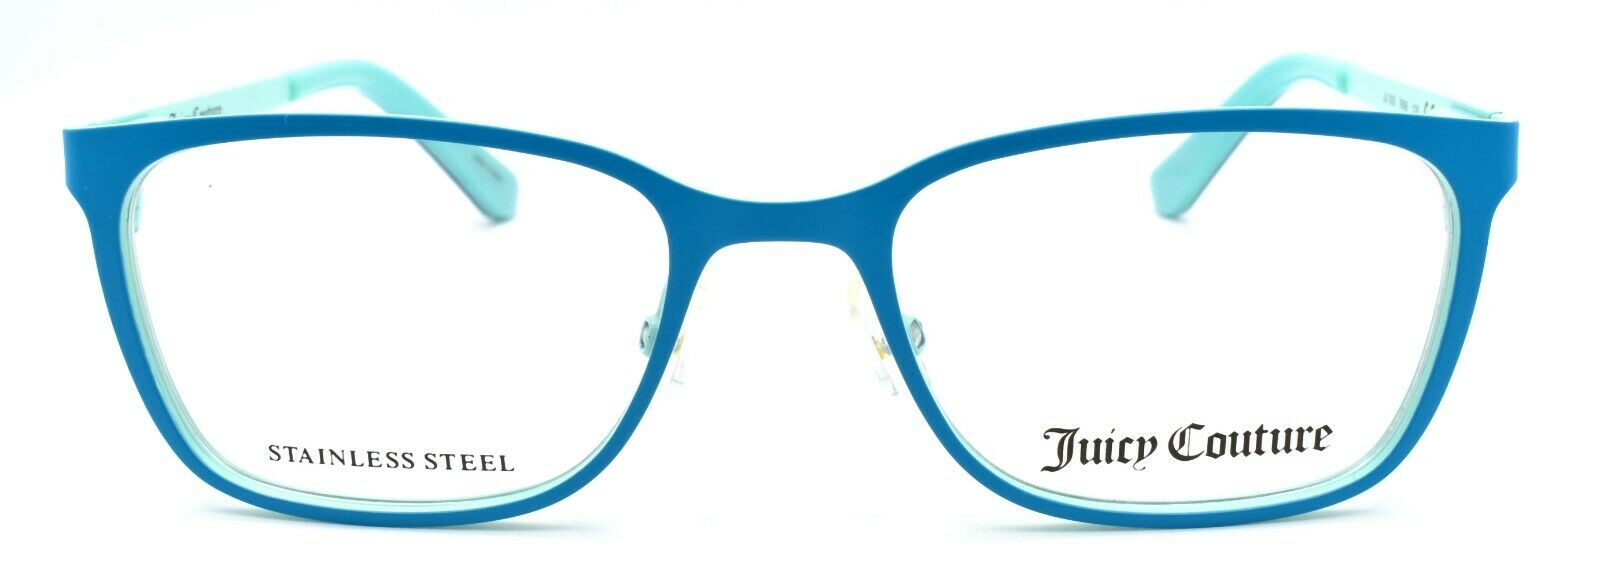 2-Juicy Couture JU930 RNB Girls Eyeglasses Frames 45-16-125 Blue / Green-762753960764-IKSpecs